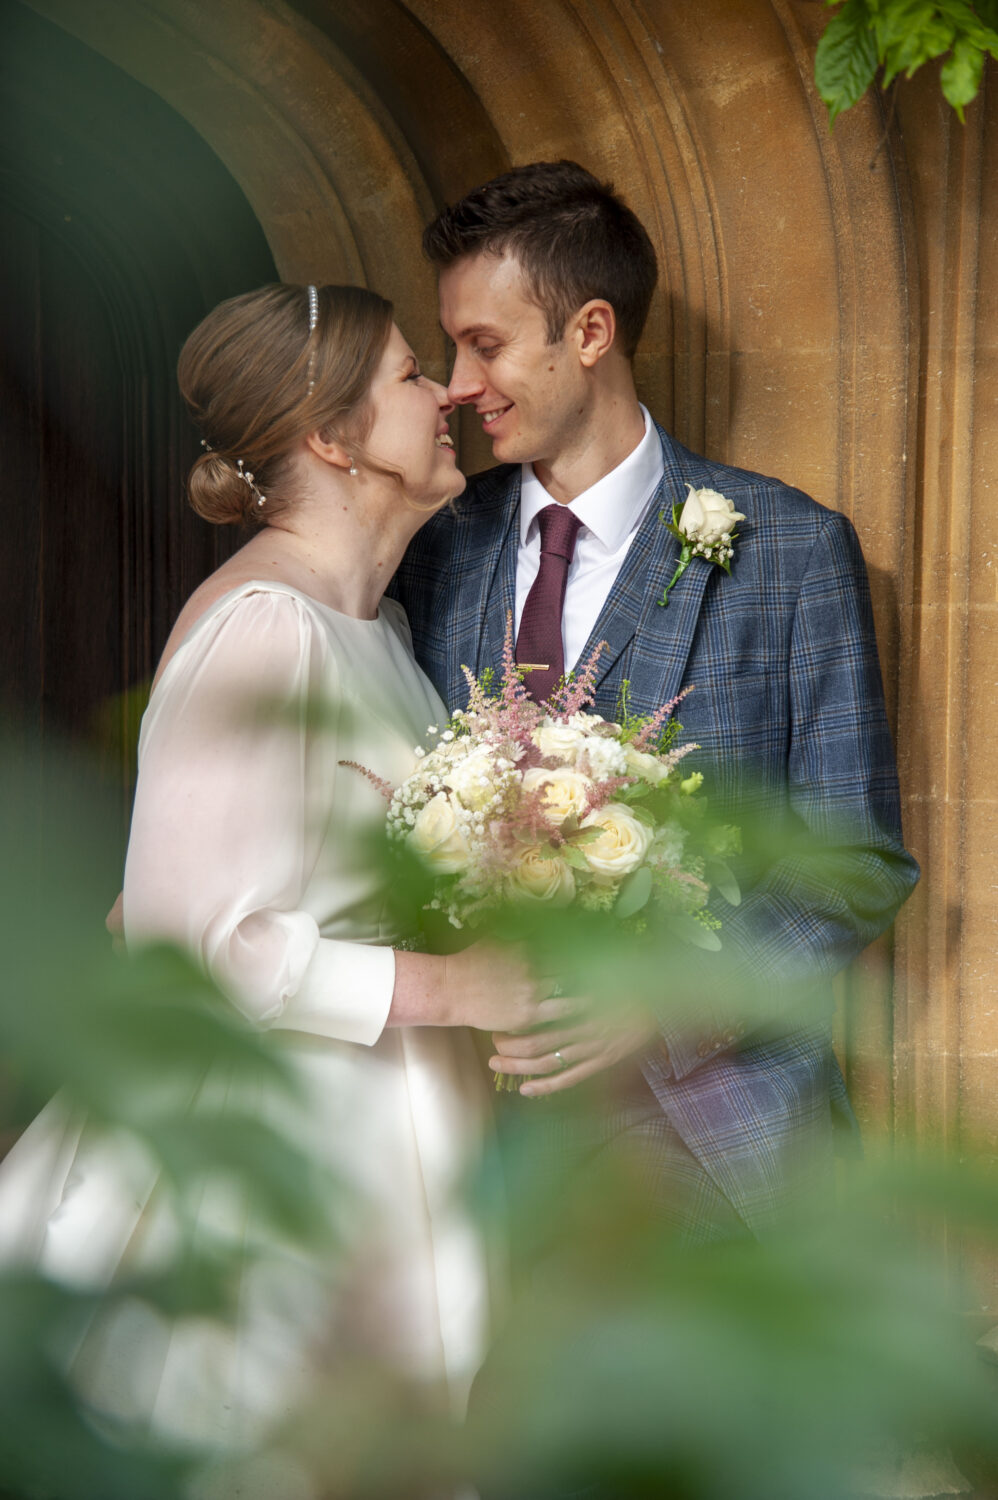 lanwadeshall, arch way, bride and groom background, flowers foreground, oak door